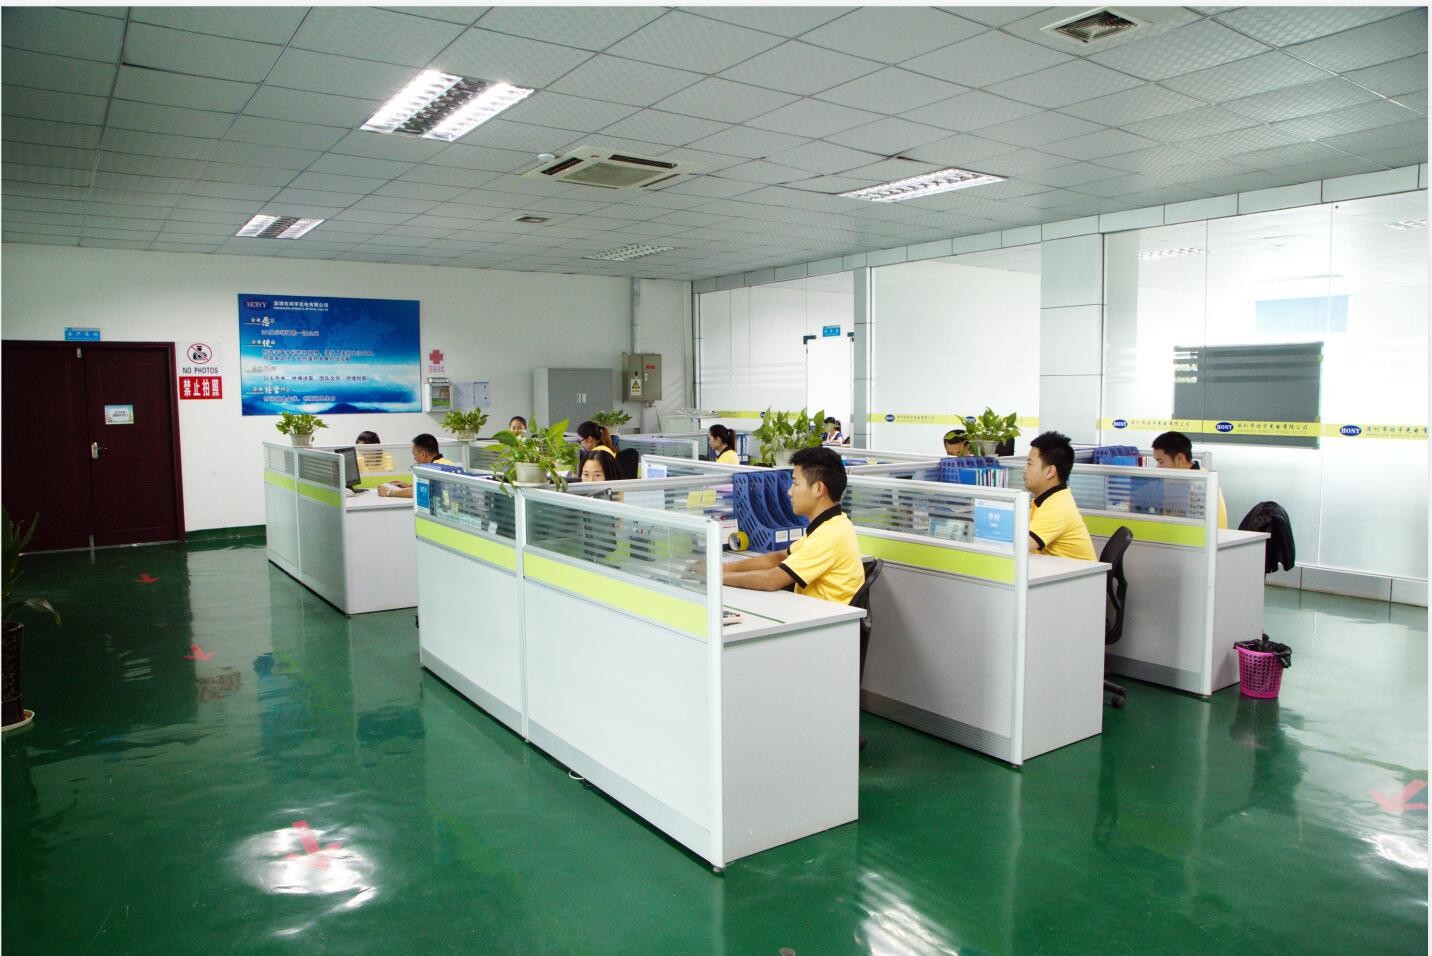 China Shenzhen HONY Optical Co., Limited Perfil de la compañía